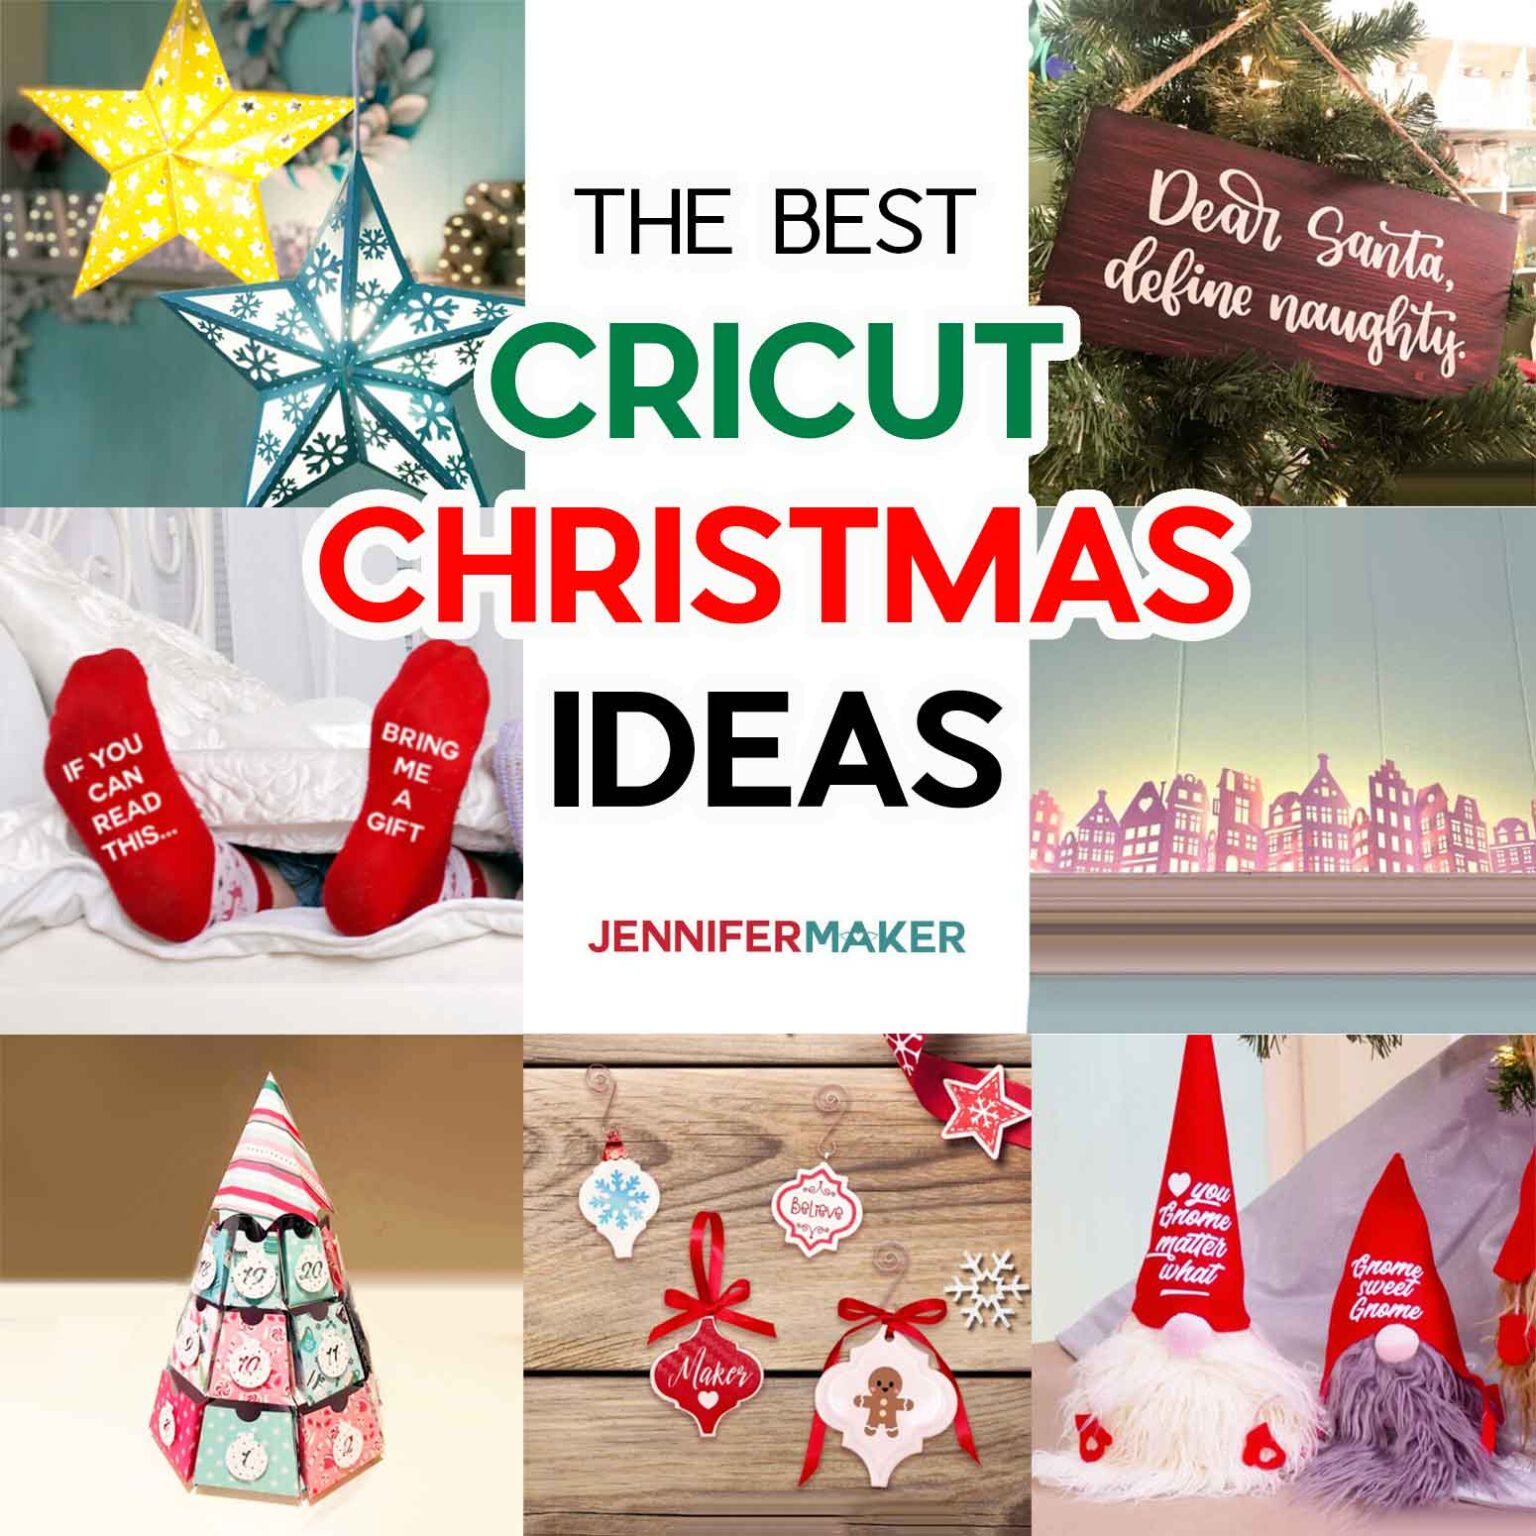 Cricut Christmas Ideas: Free SVGs & Tutorials - Jennifer Maker